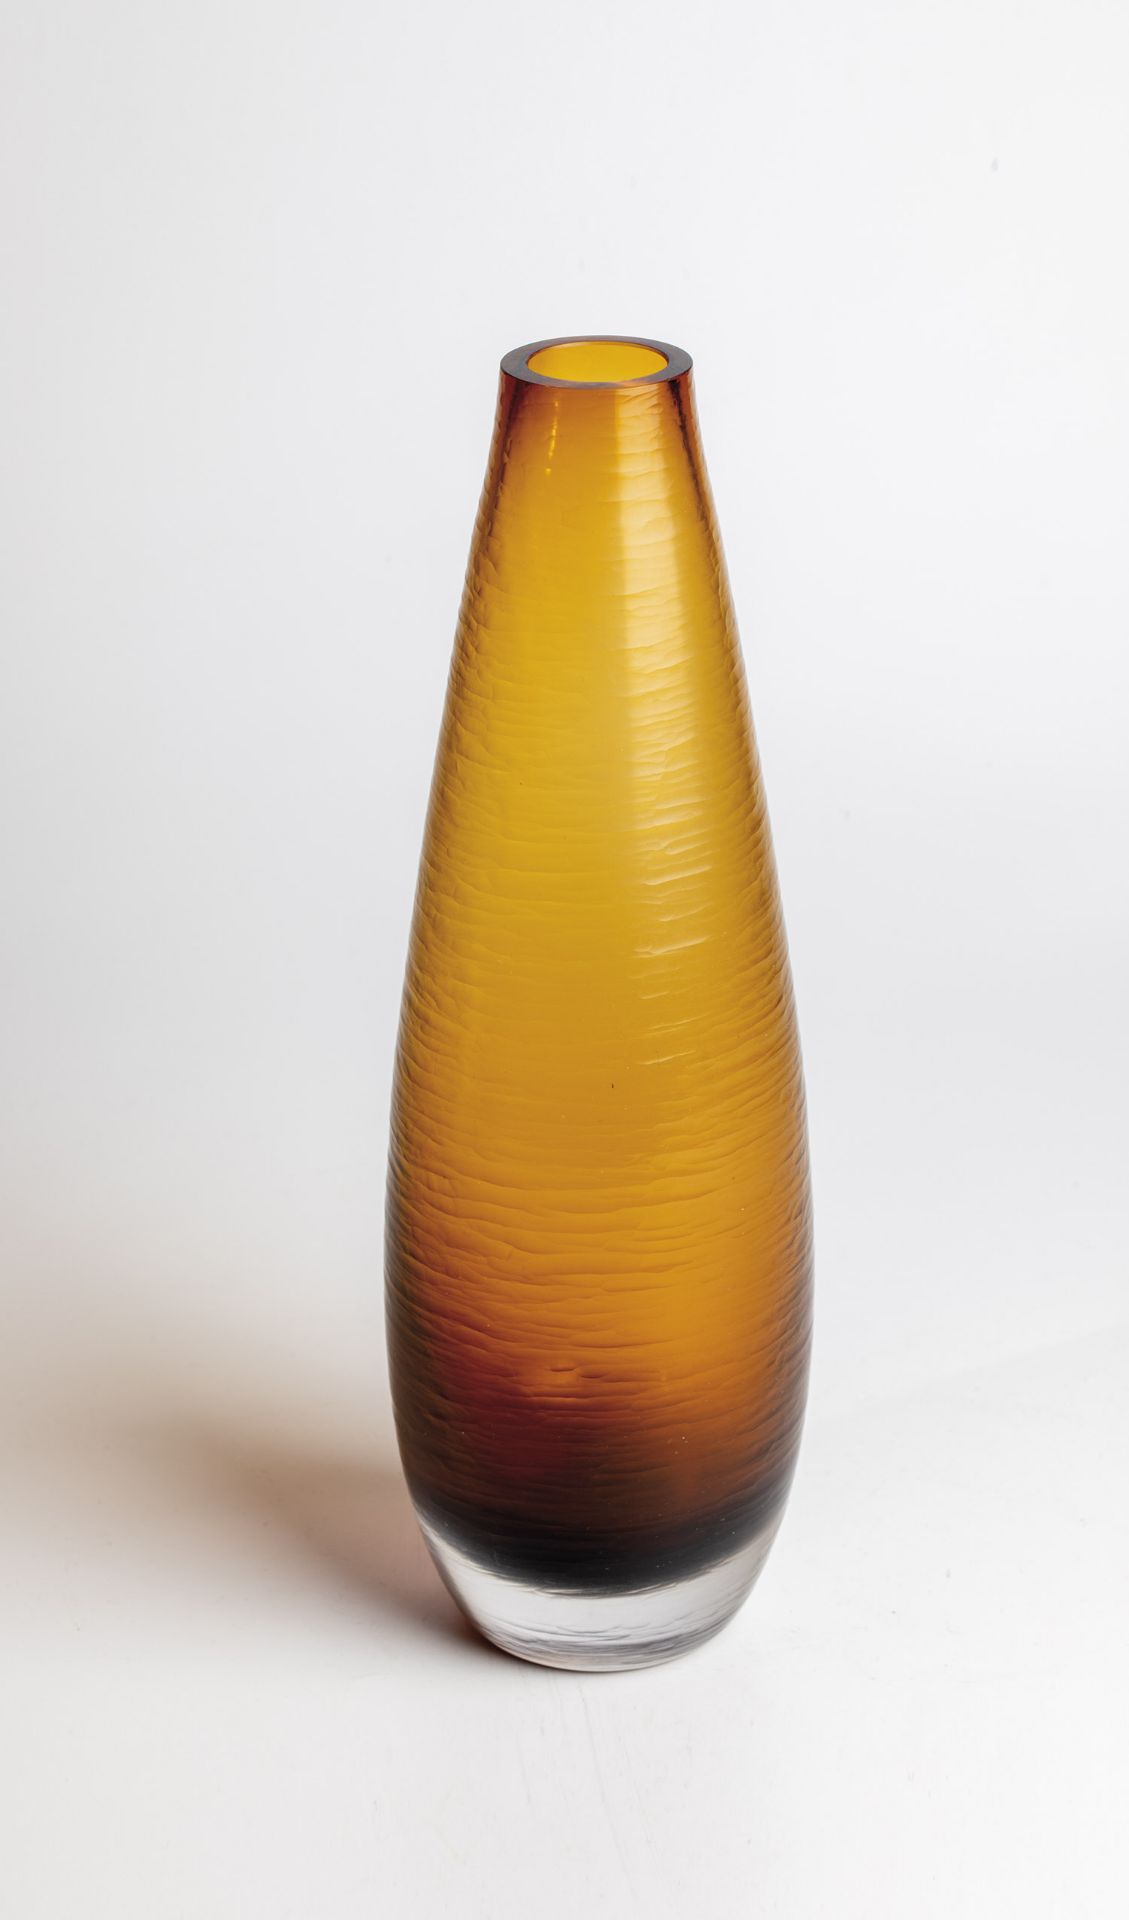 Vase Alexander Wallner, Atelier Maennerhaut, Zwiesel, 2002 Amber glass, colourless overlay. sanded